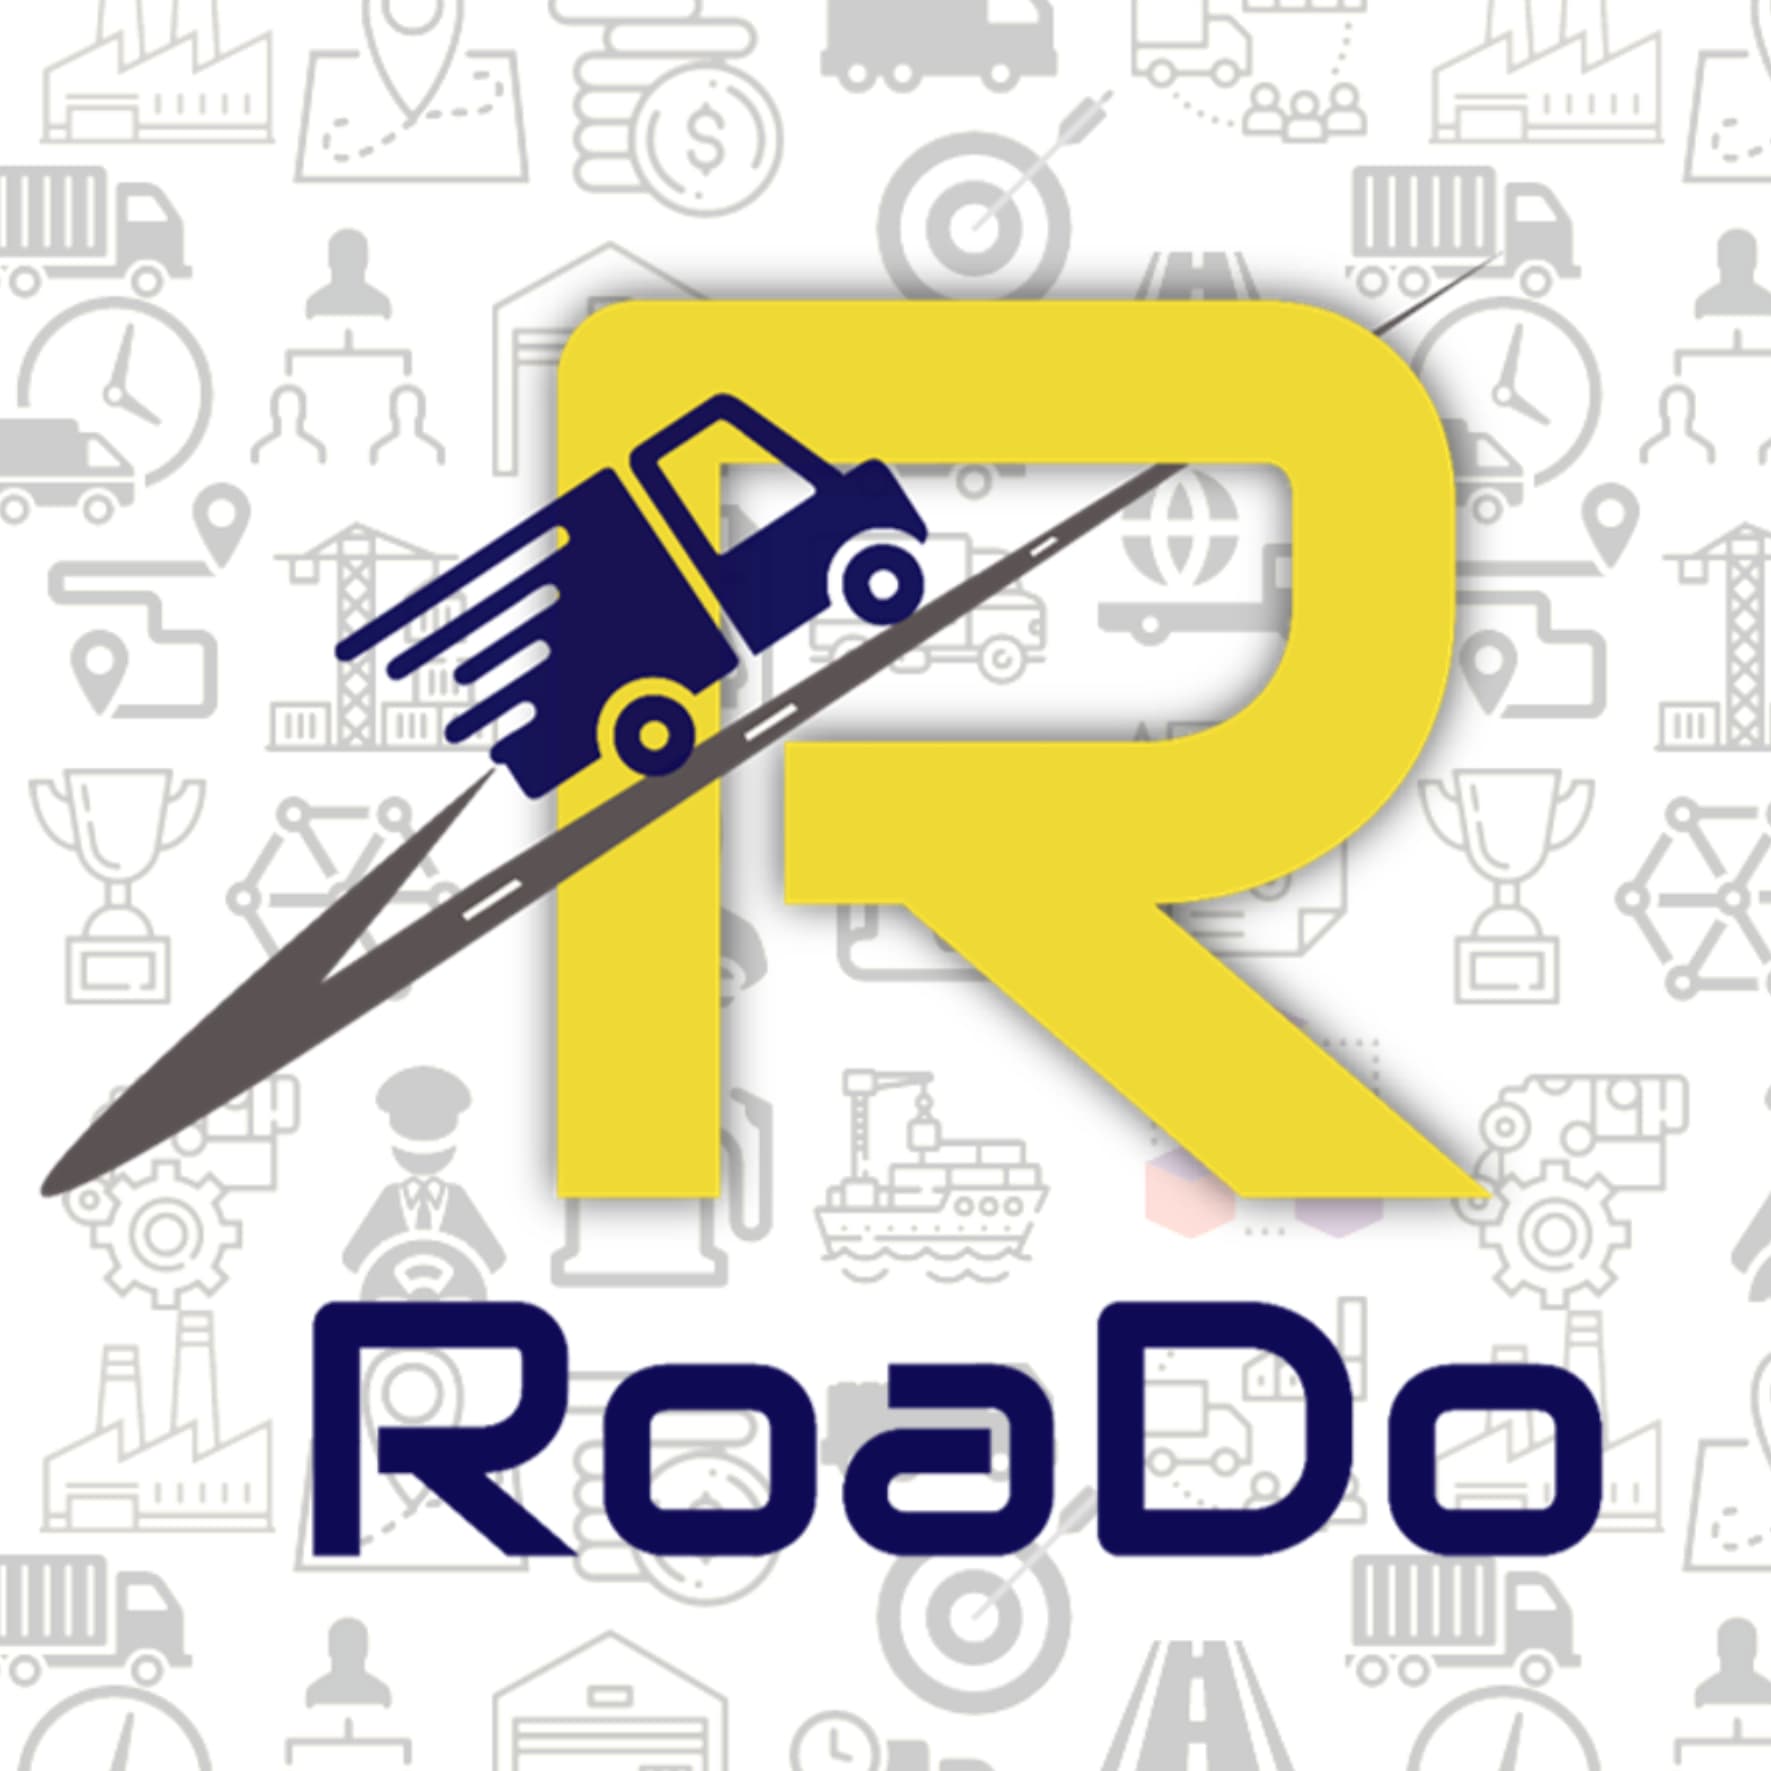 RoaDo's logo